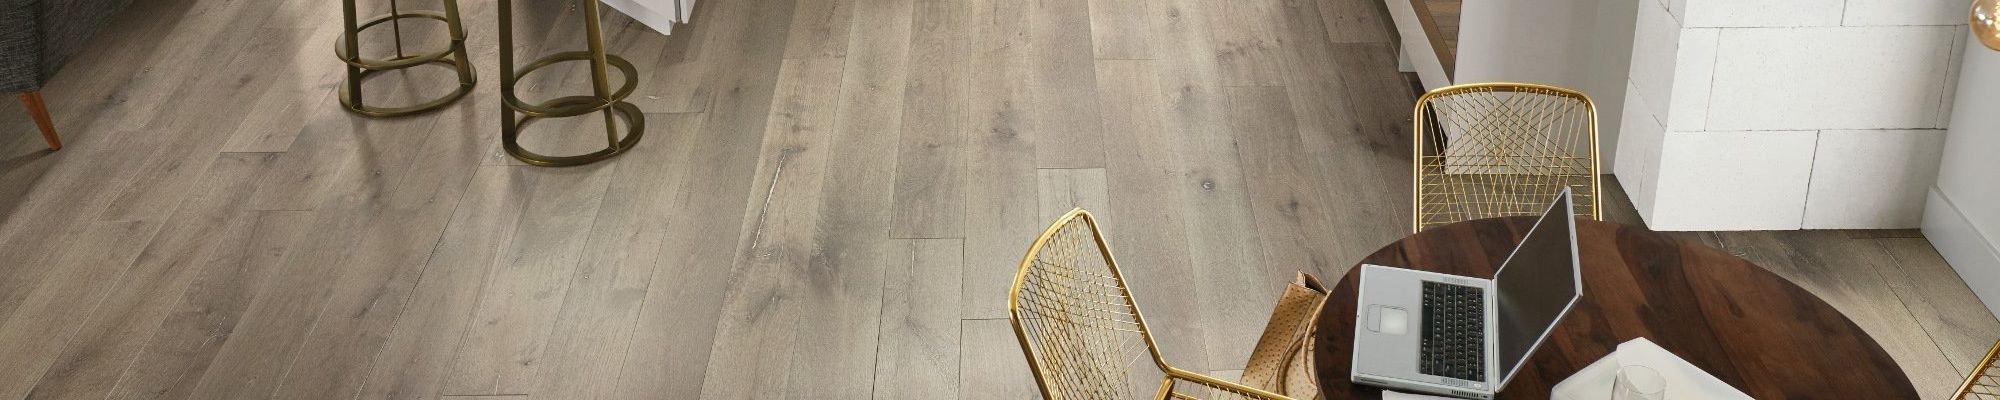 Wood-look laminate floor from Carpet City & Flooring Center in Fairfield, CT